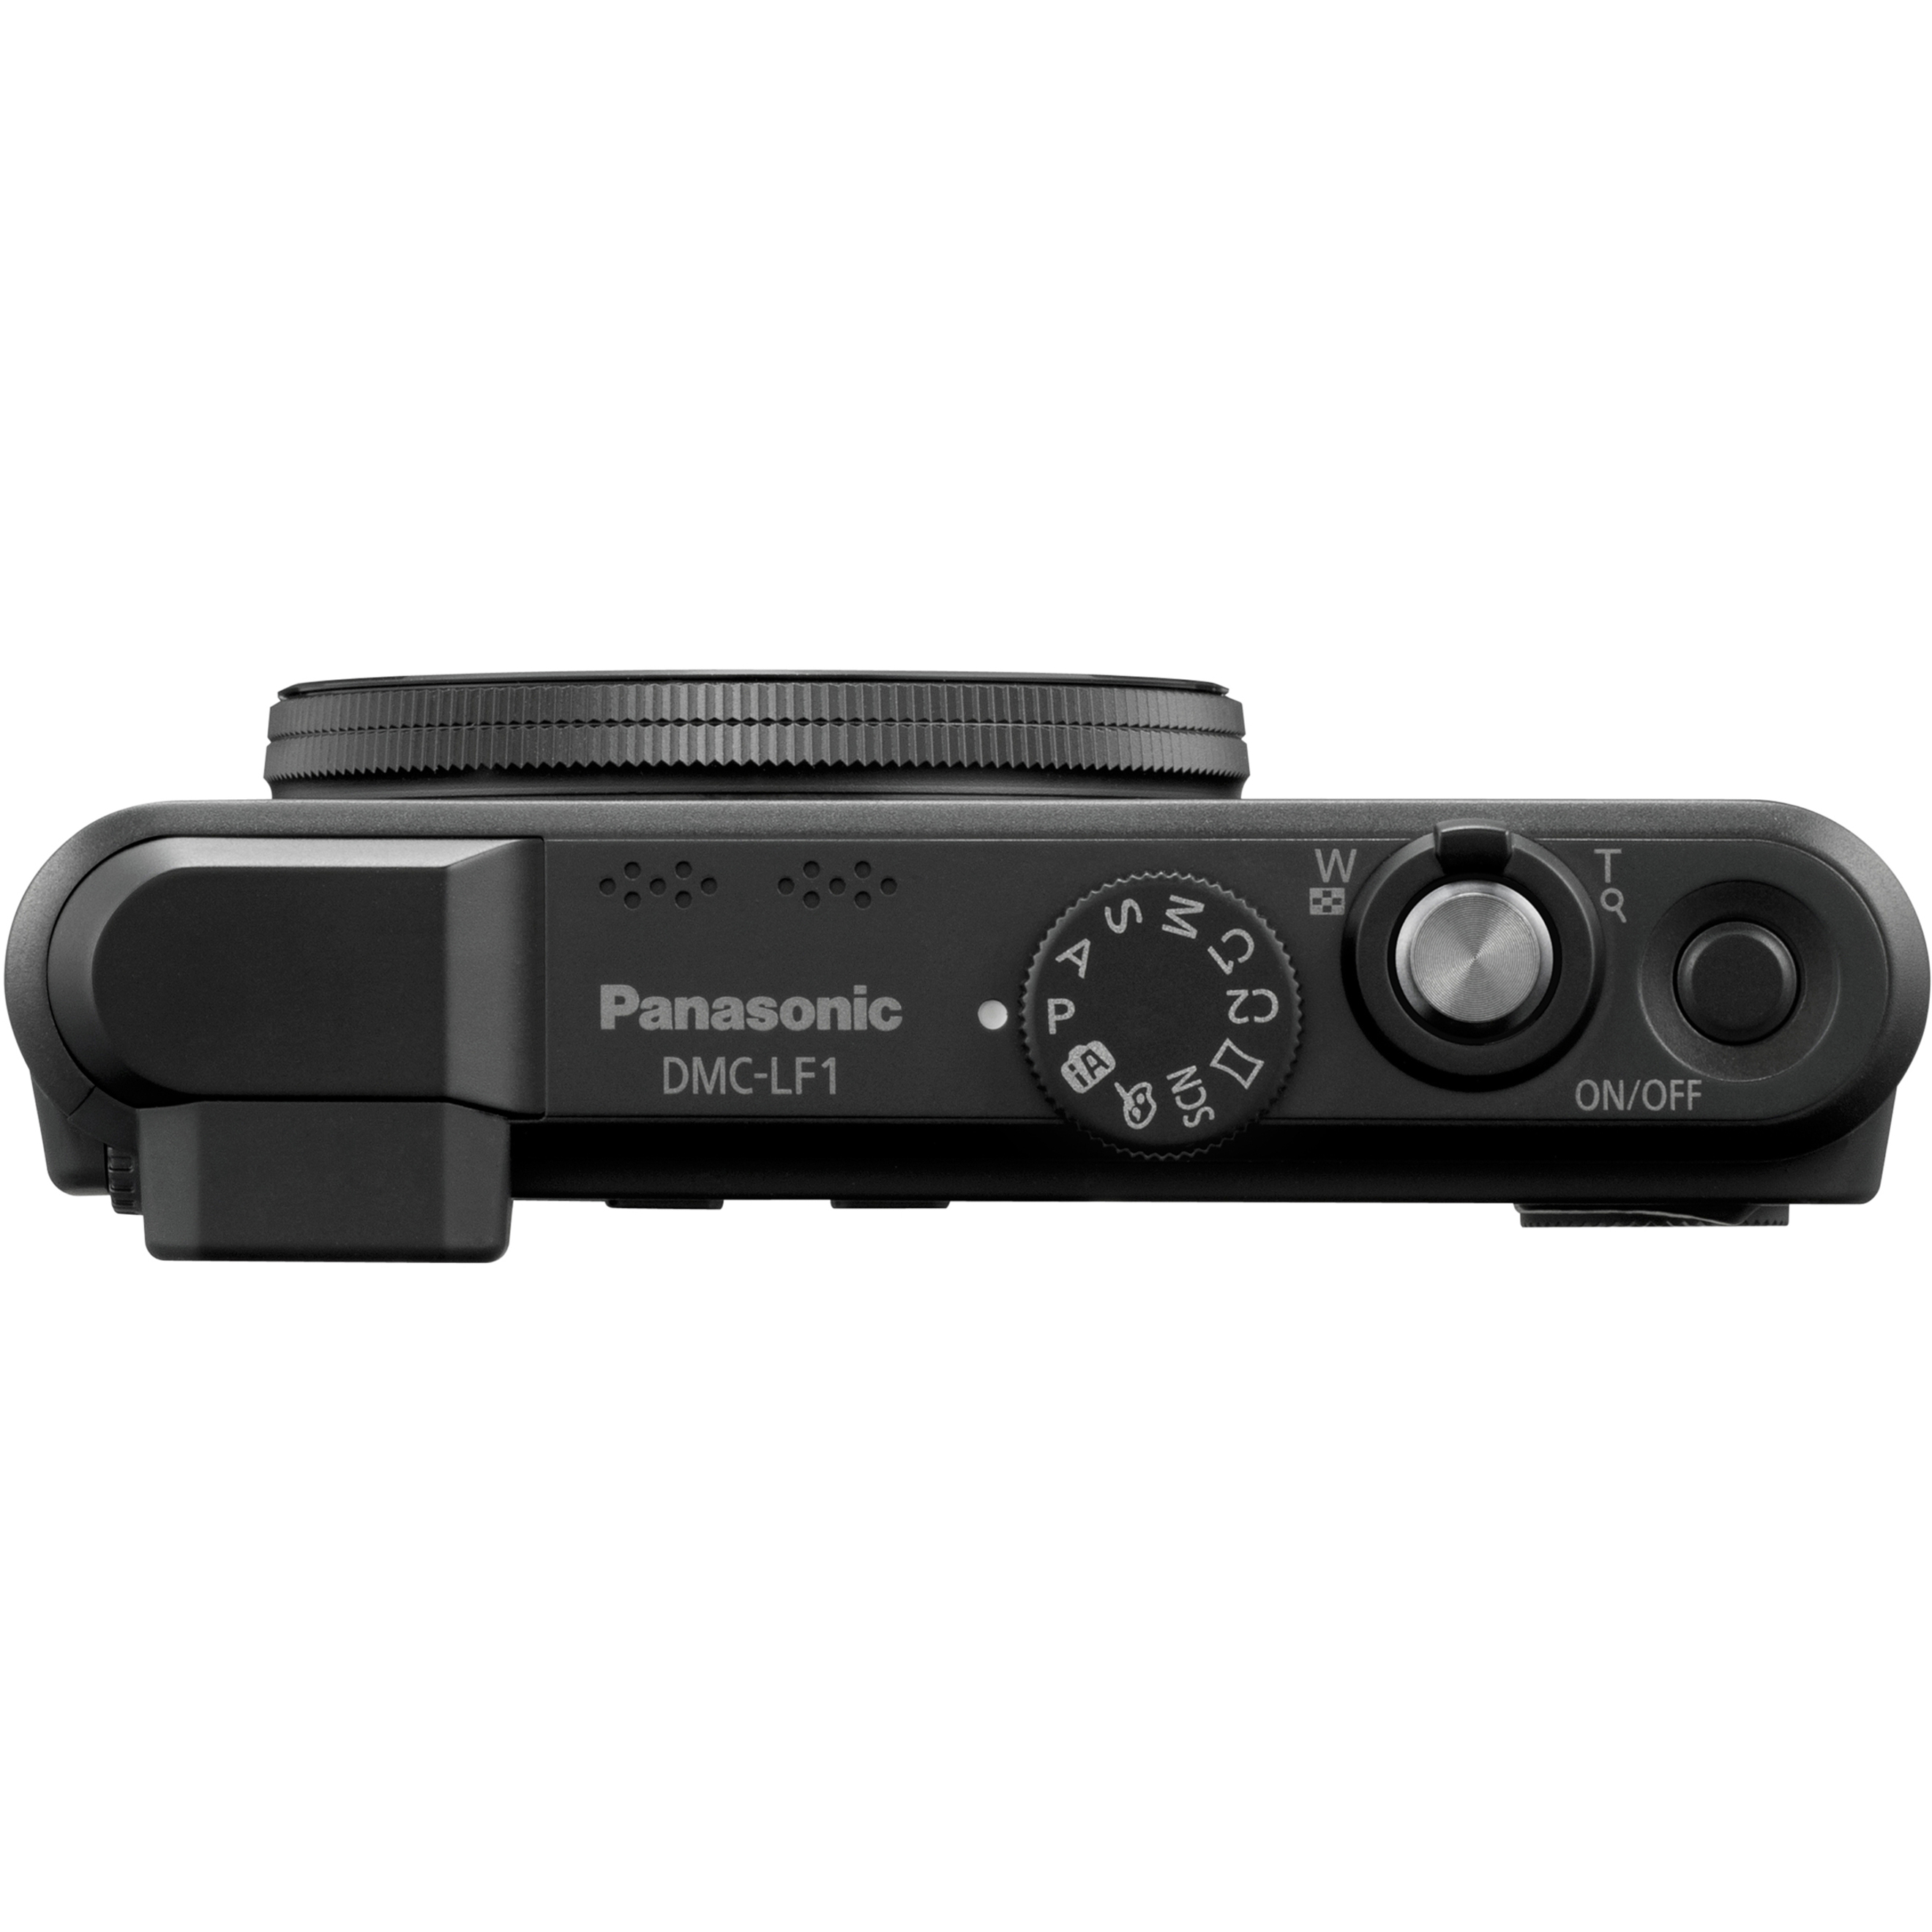 Panasonic Lumix DMC-LF1 12.1 Megapixel Bridge Camera, Black - image 5 of 5